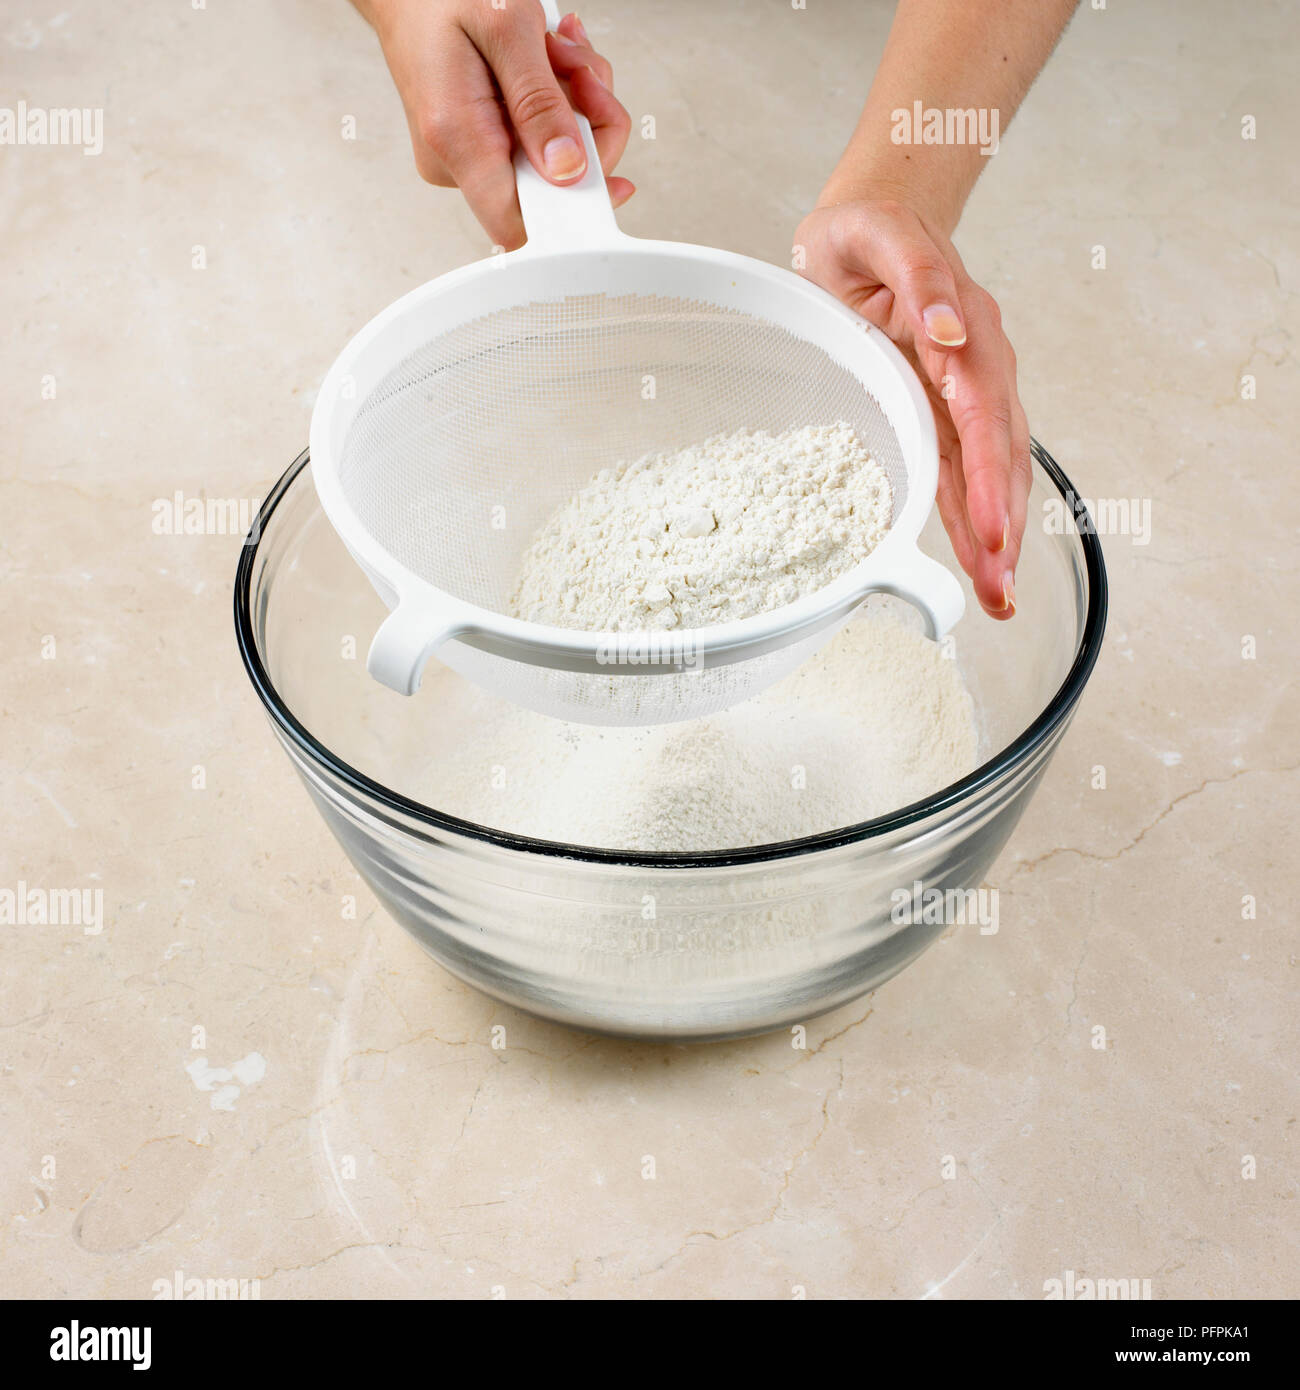 Sifting flour into mixing bowl Stock Photo